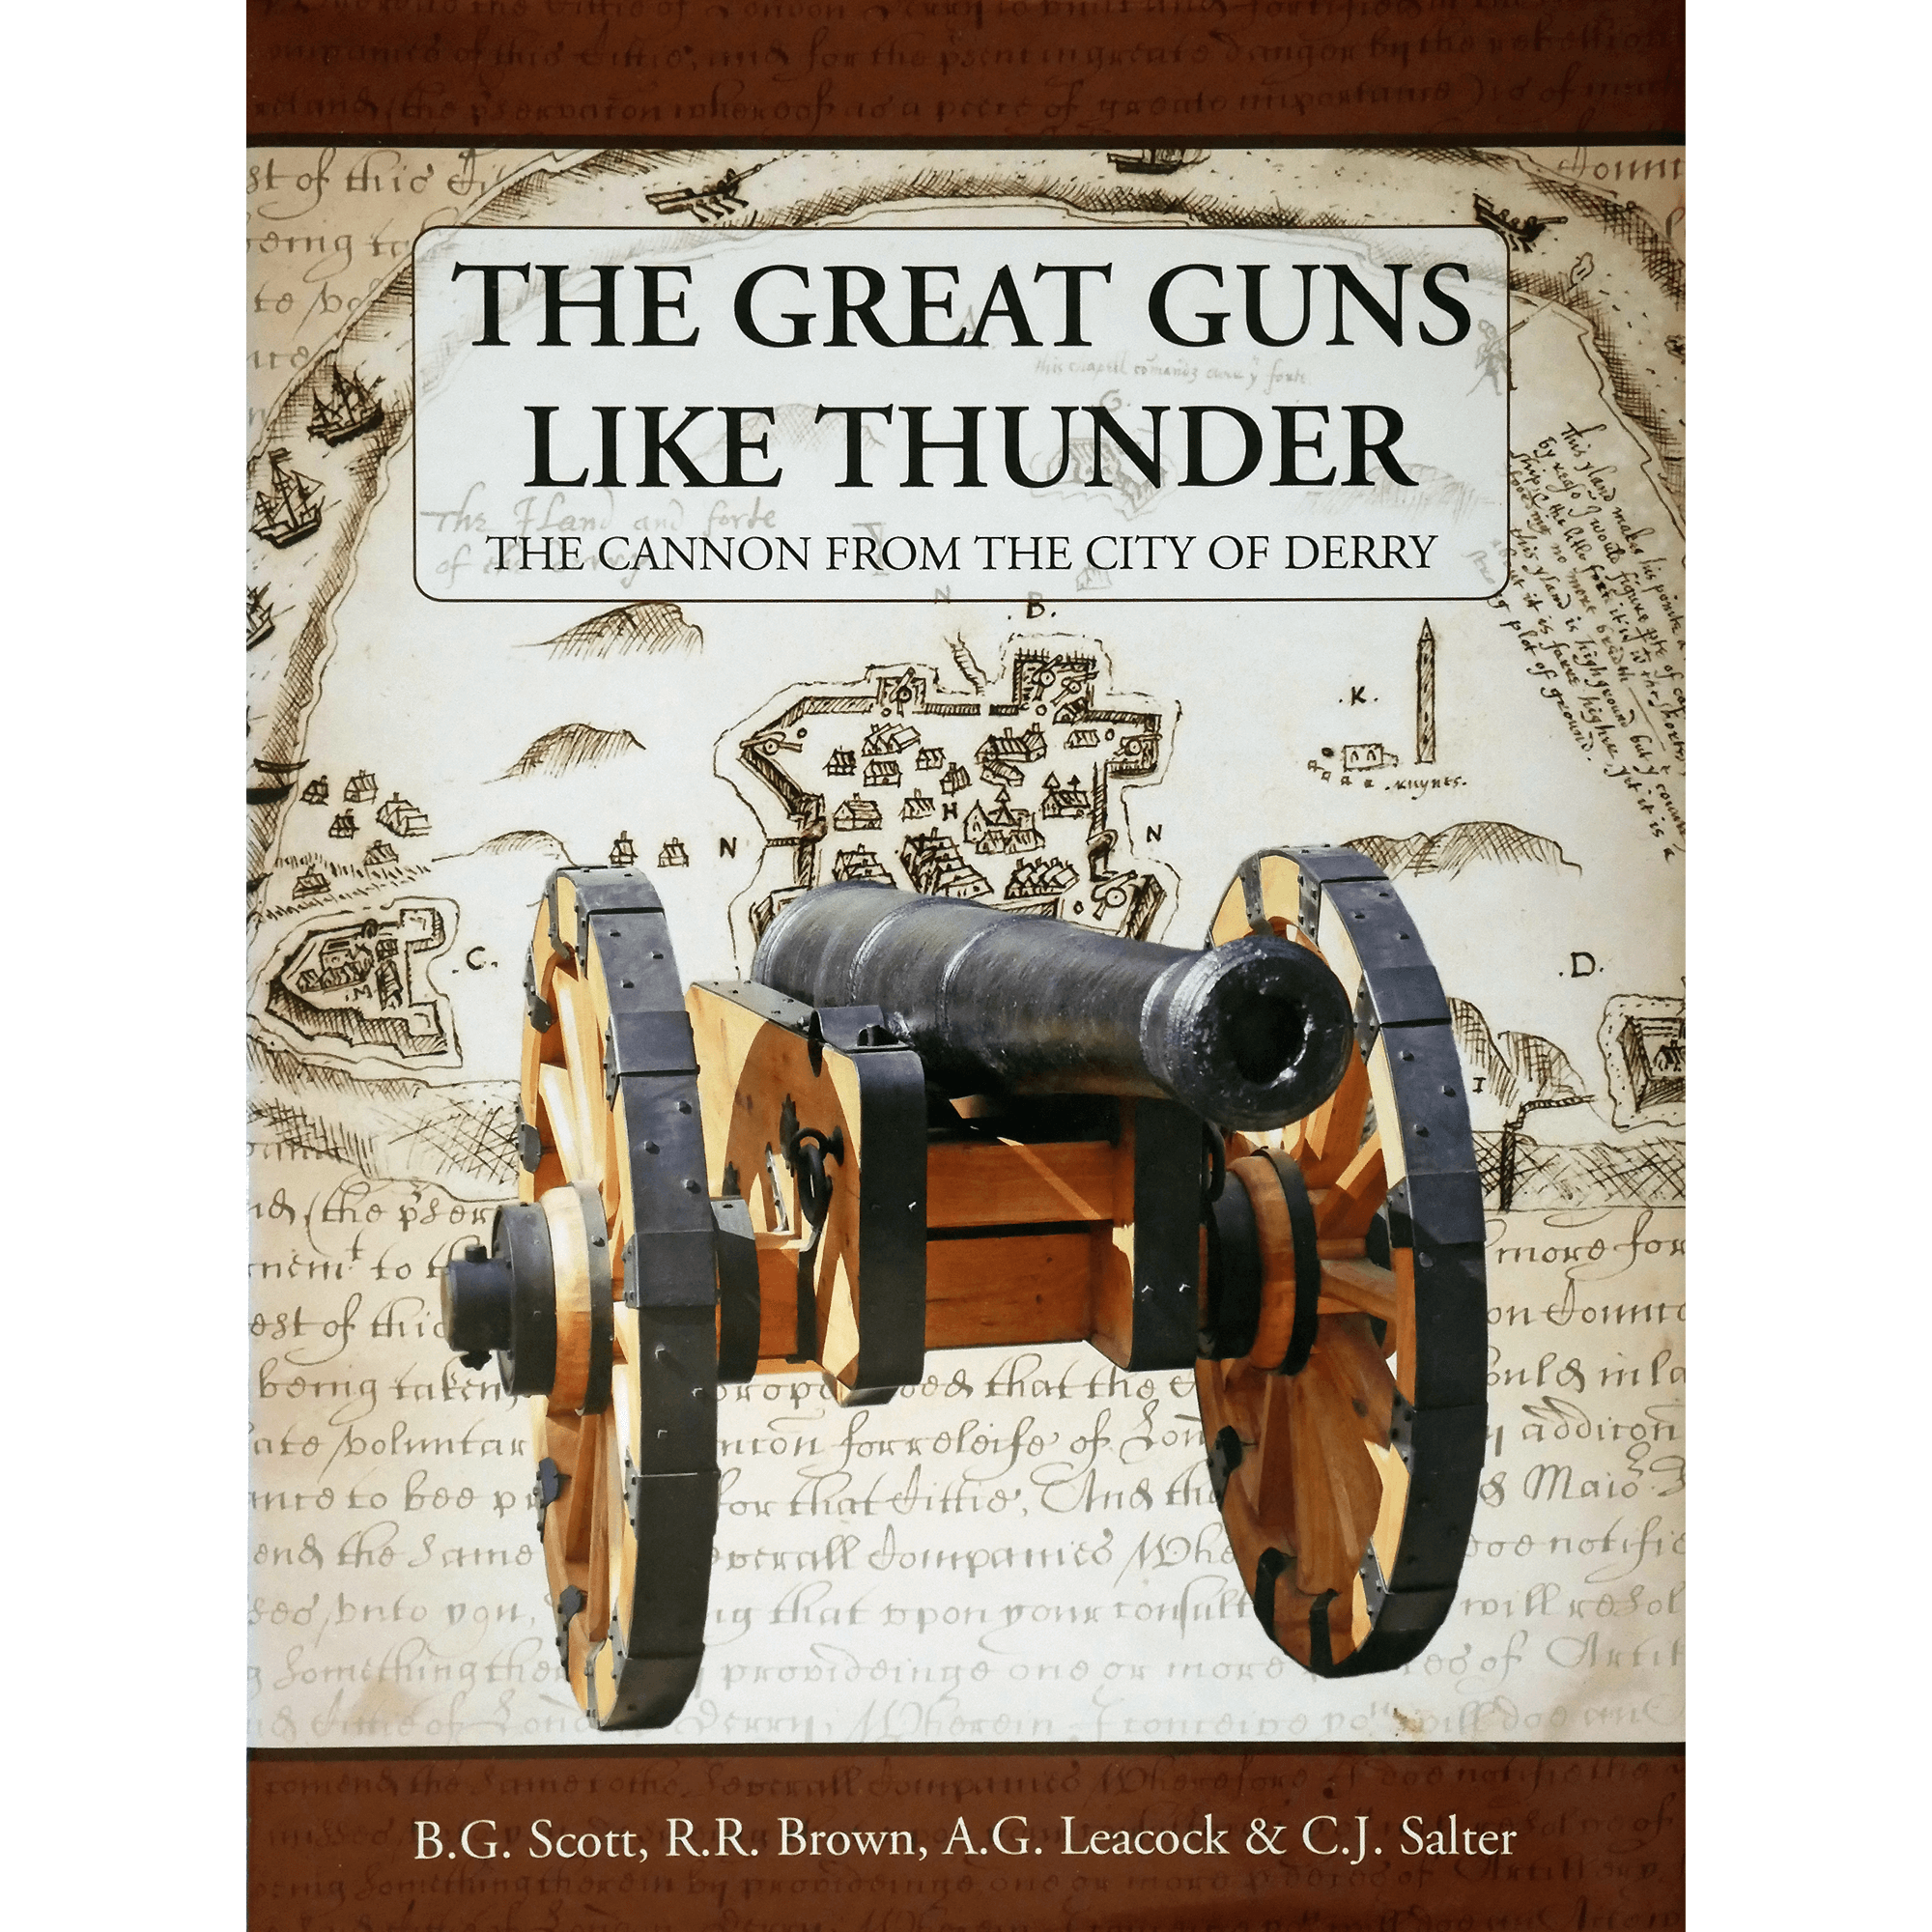 The Great Guns Like Thunder